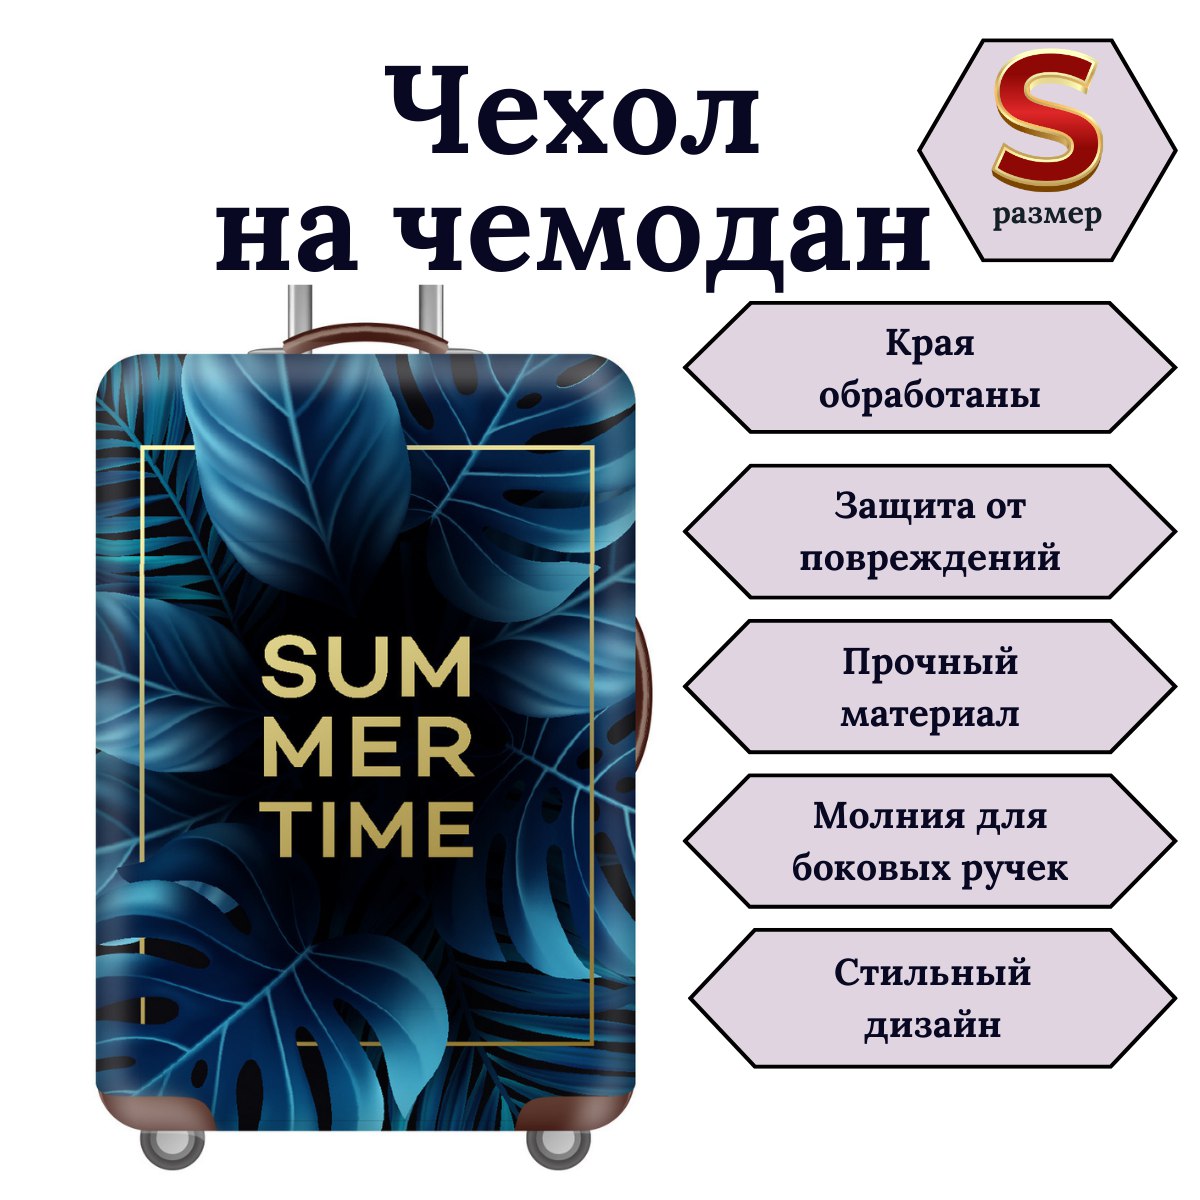 Чехол для чемодана Slaventii 123 summer time, S